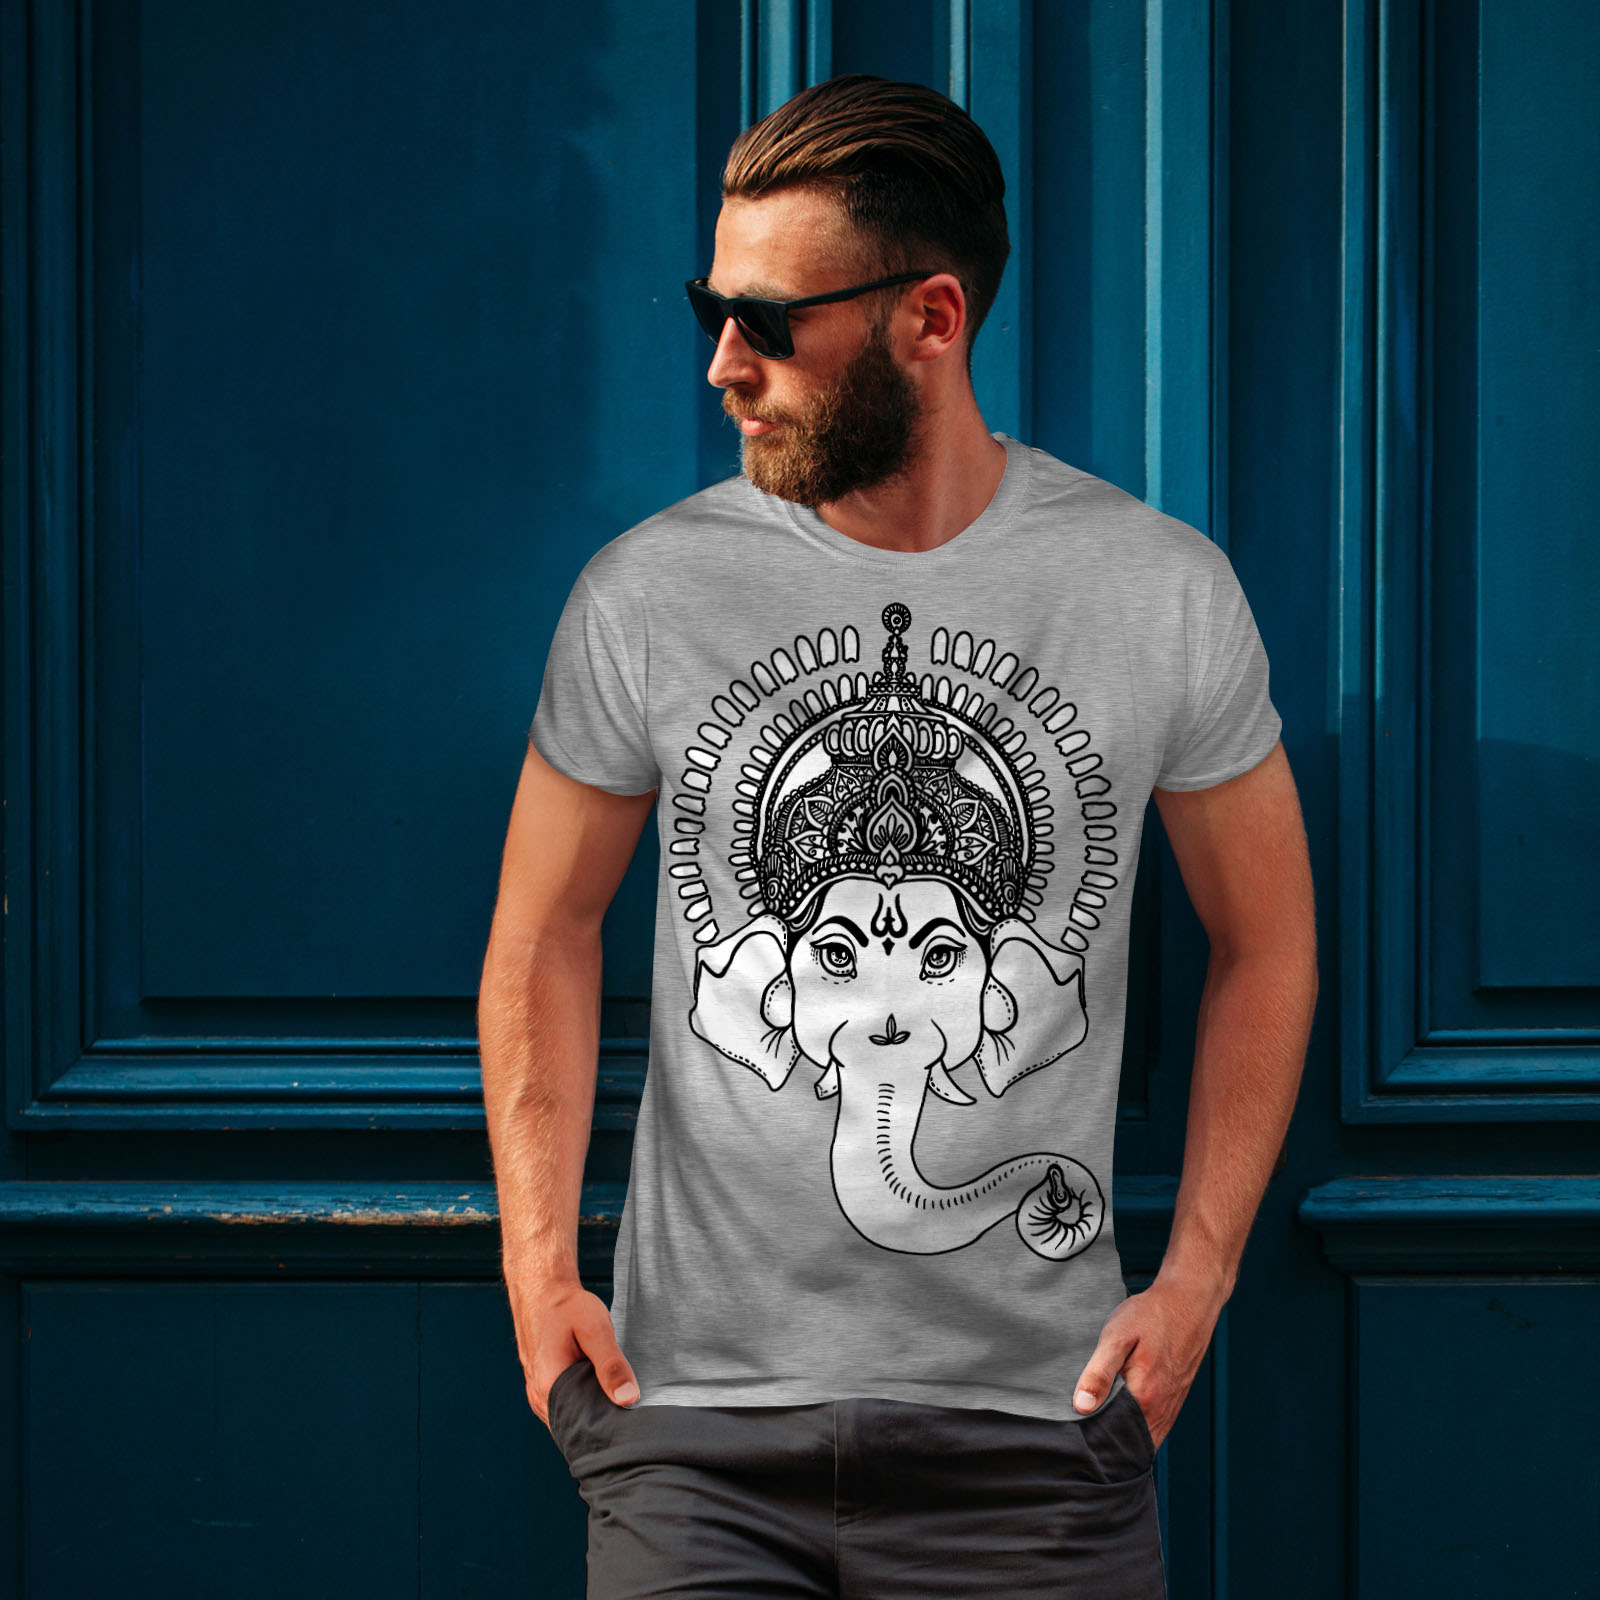 hindú Camiseta Impresa Diseño Gráfico Arte indio wellcoda Ganesha para hombre Camiseta